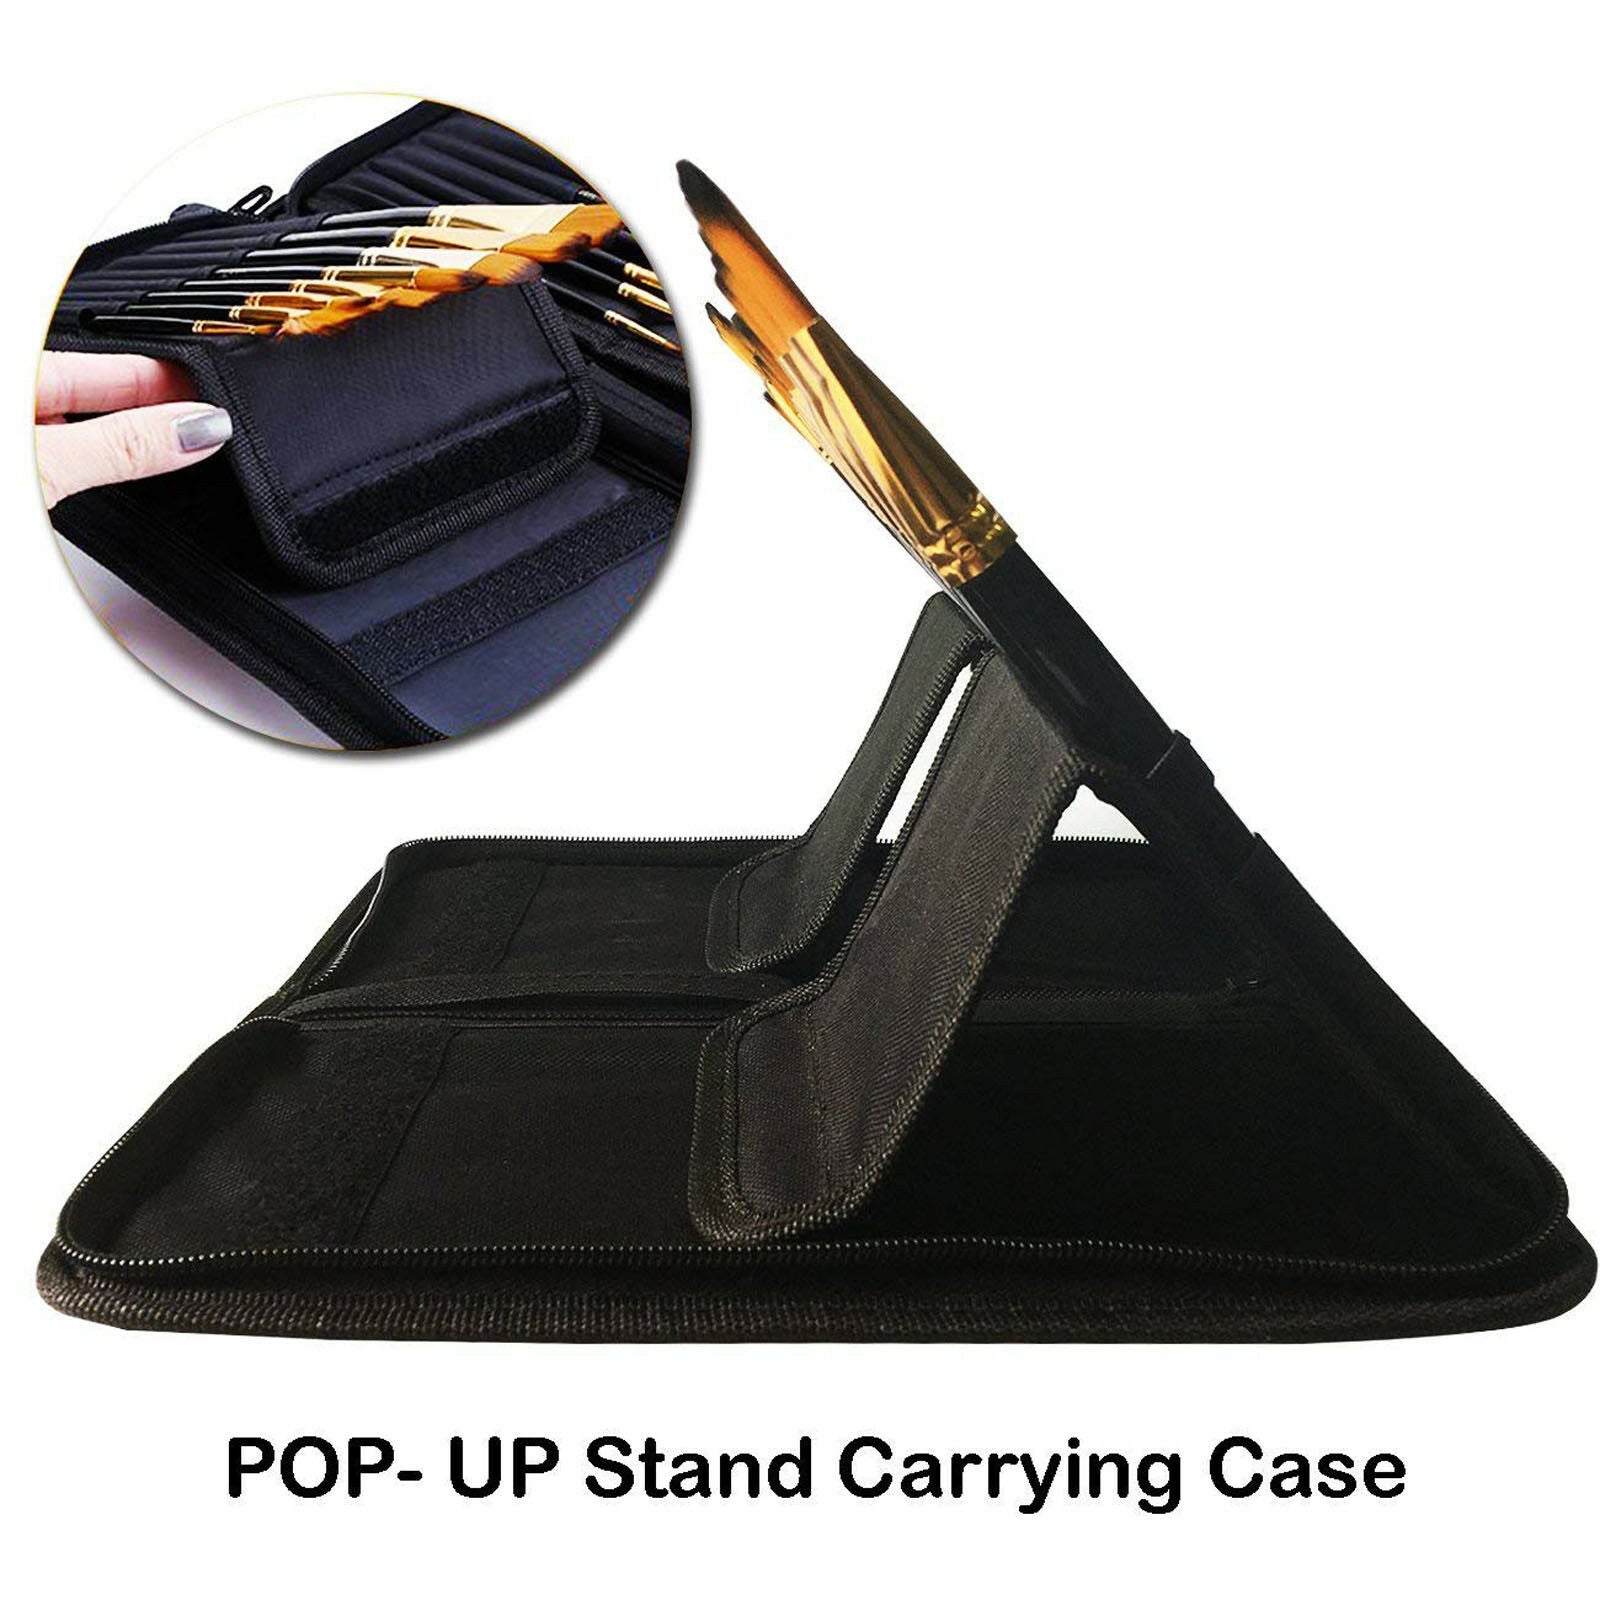 Professional Artist Paintbrush Set & Pop up Carrying Case Travel